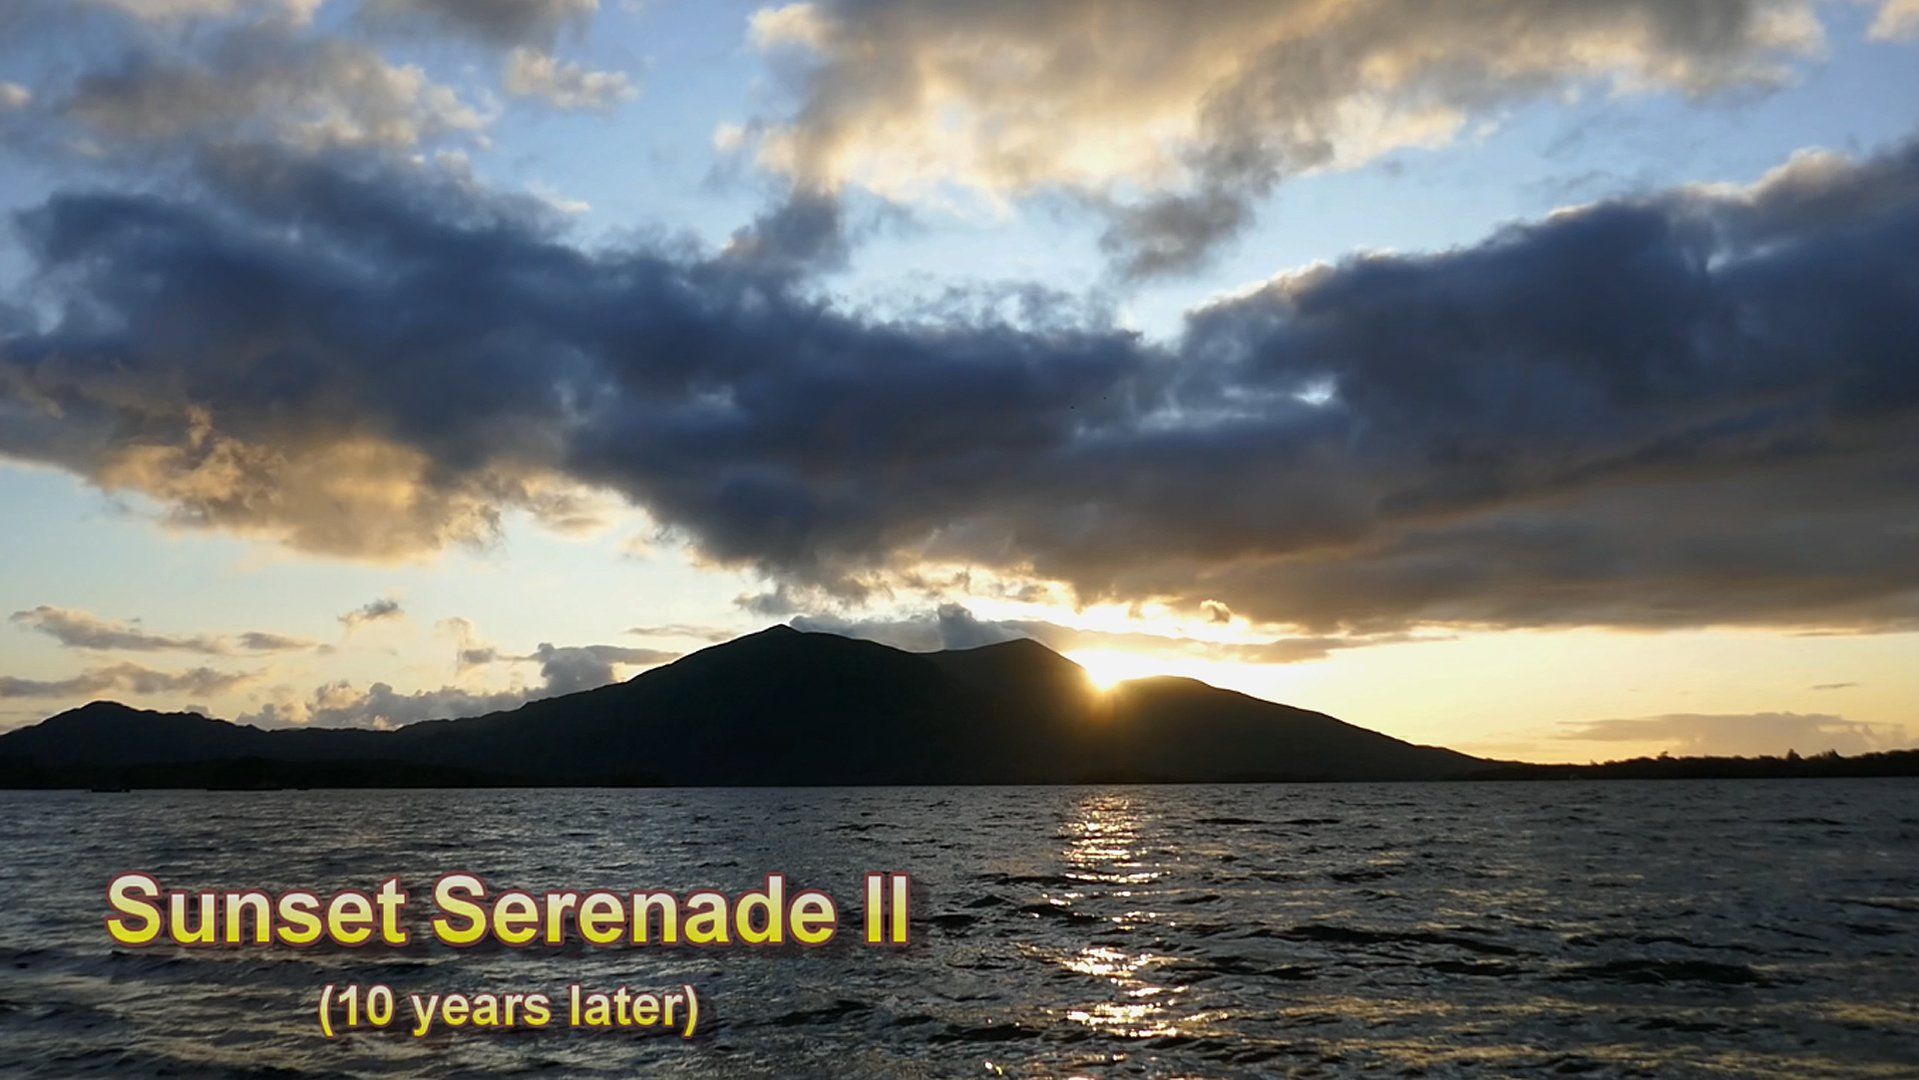 Sunset Serenade II Blog by Denis O' Sullivan